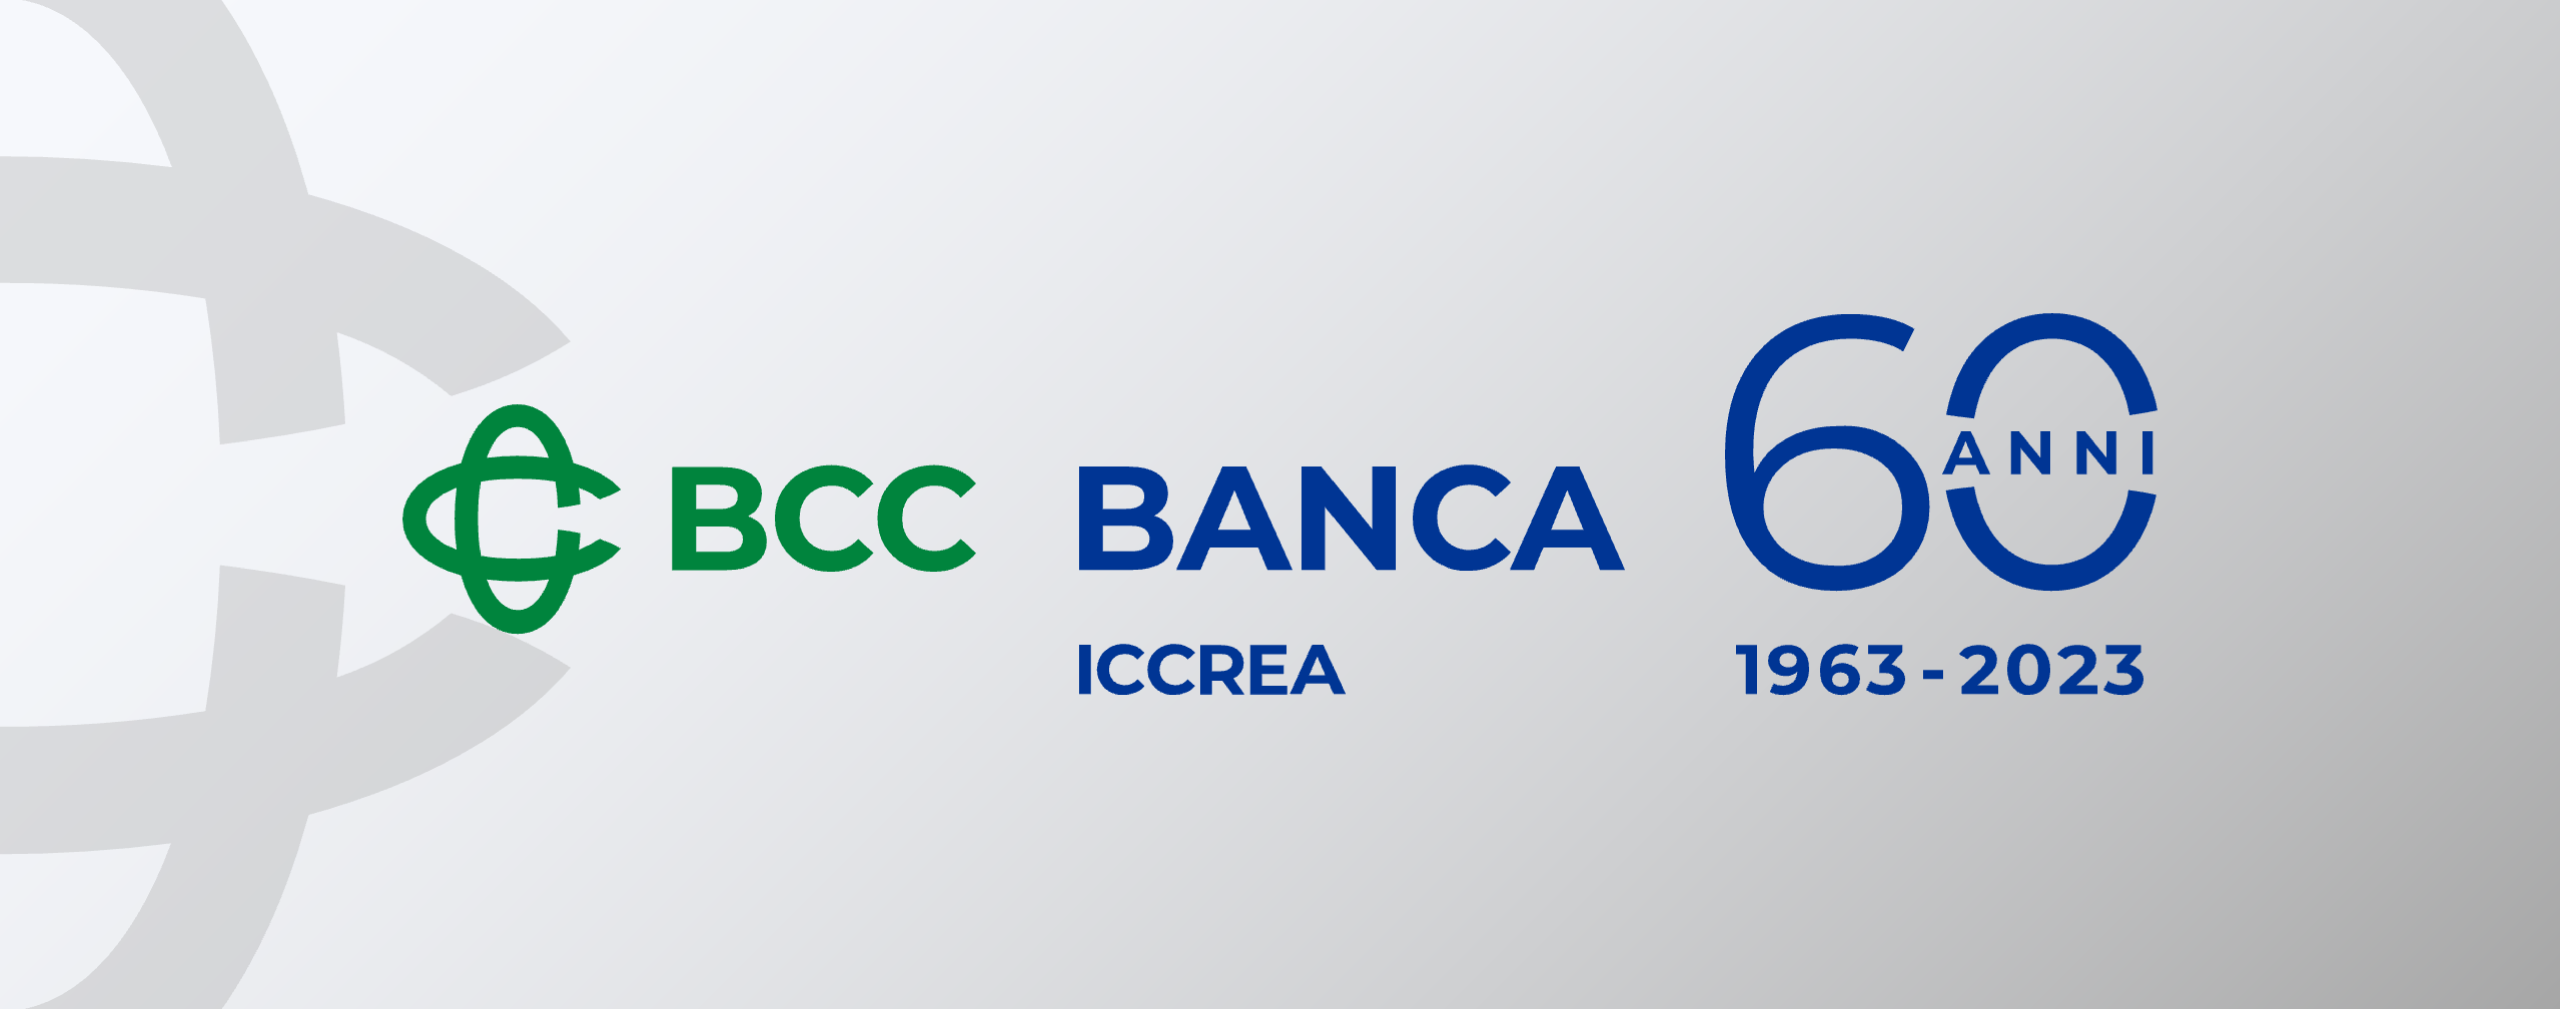 BCC Banca 60 anni